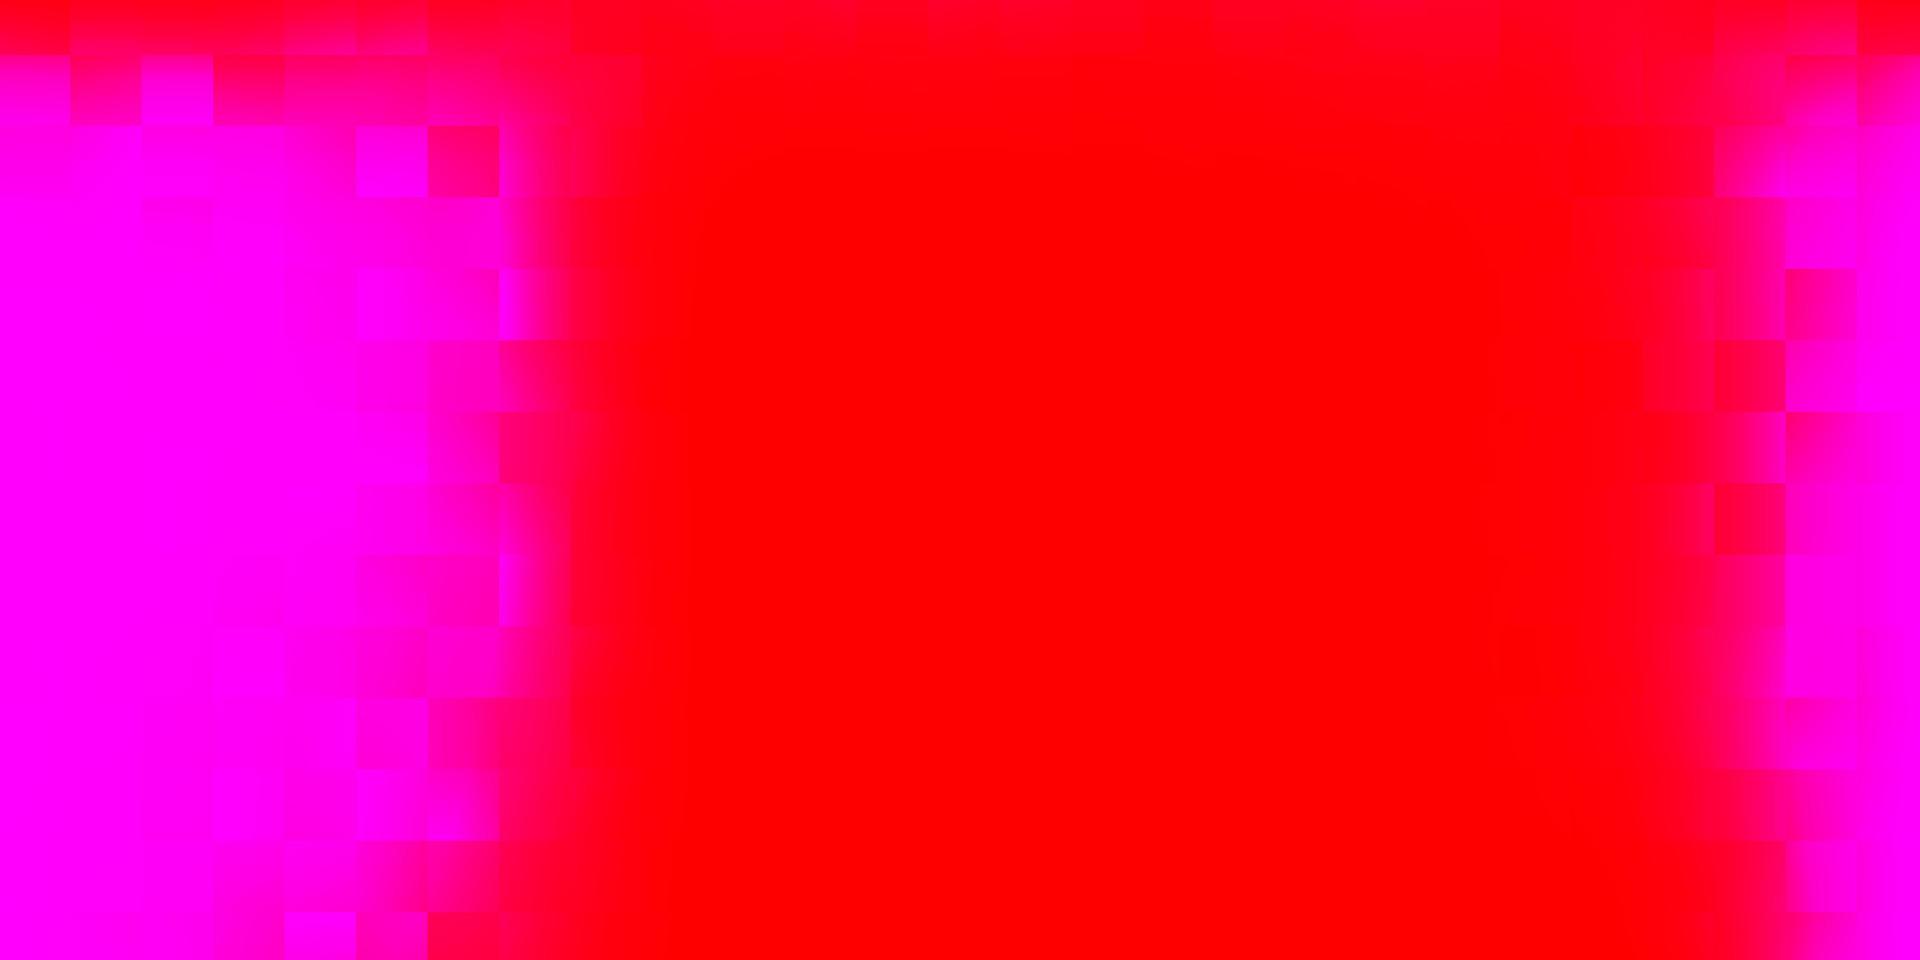 hellrosa, rote Vektortextur im polygonalen Stil. vektor